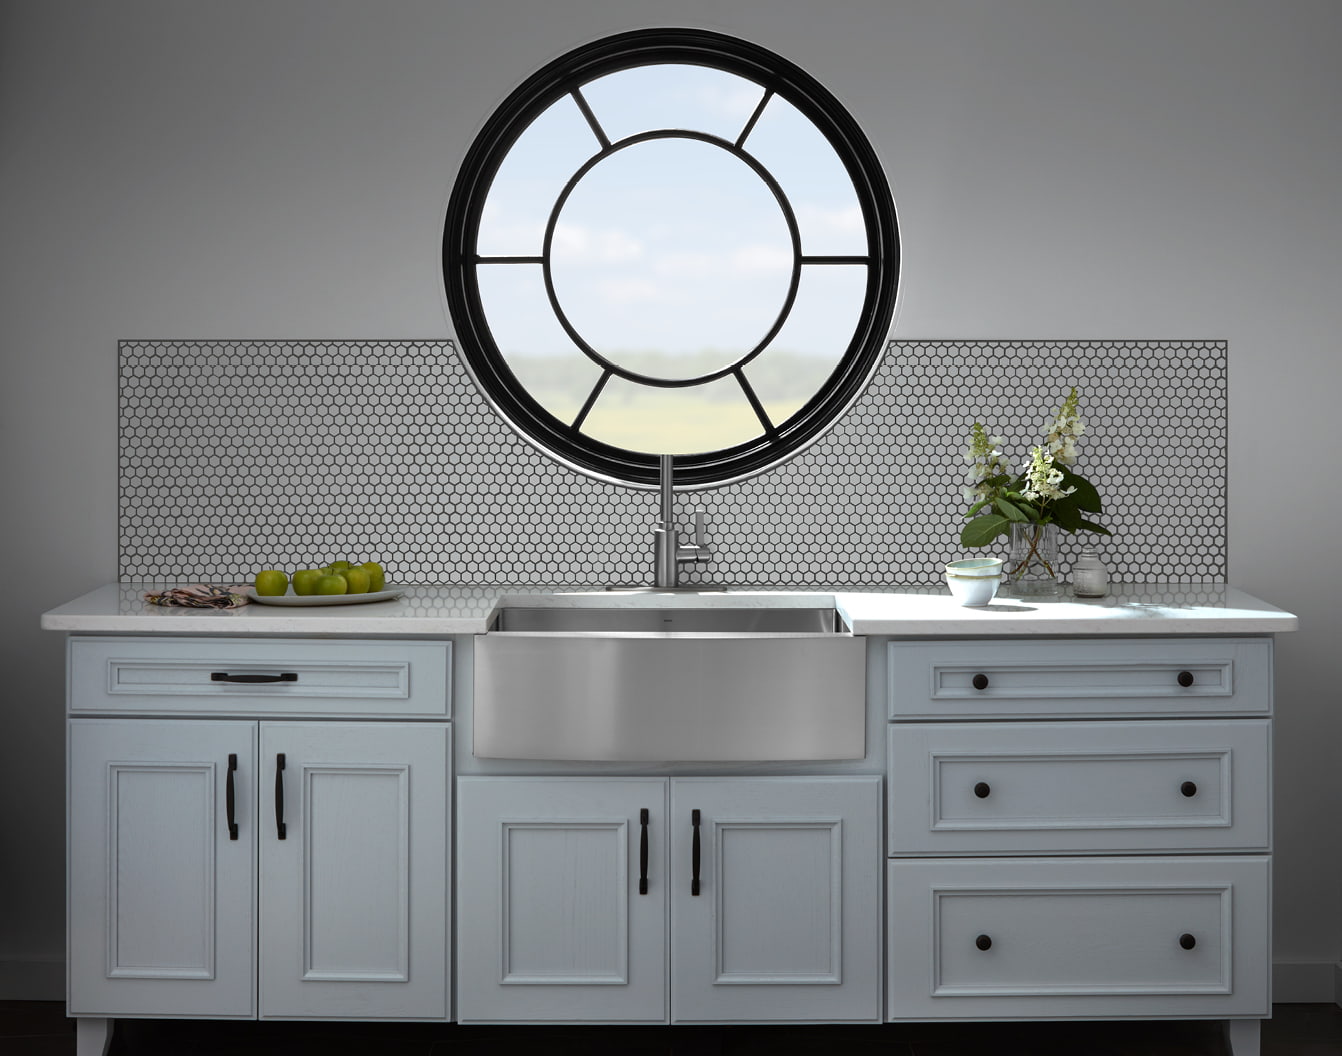 custom circle window over a kitchen sink